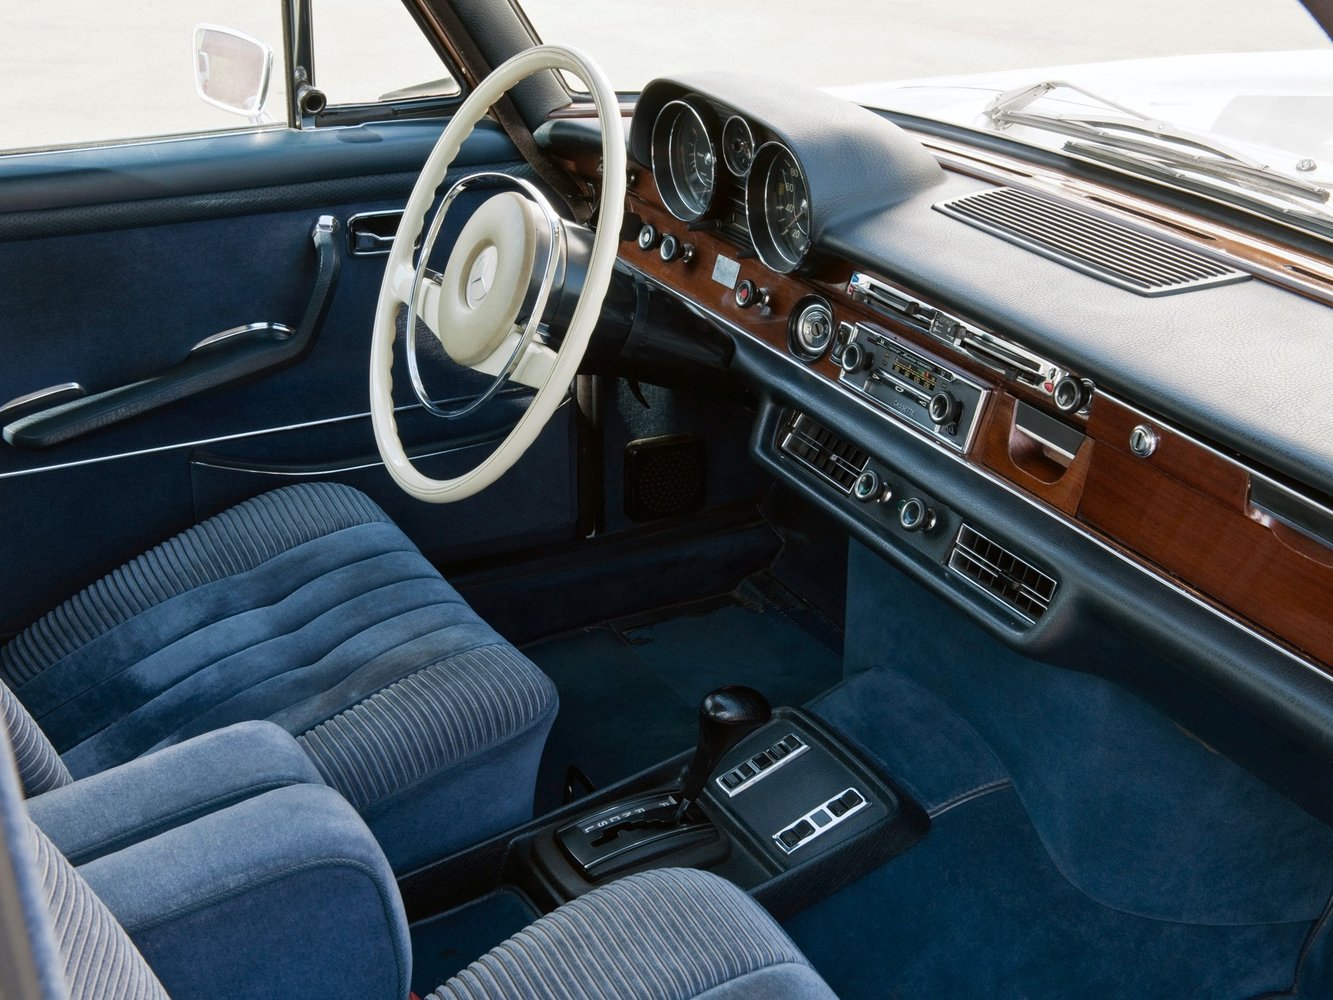 седан Mercedes-Benz S-klasse 1965 - 1972г выпуска модификация 2.5 AT (130 л.с.)